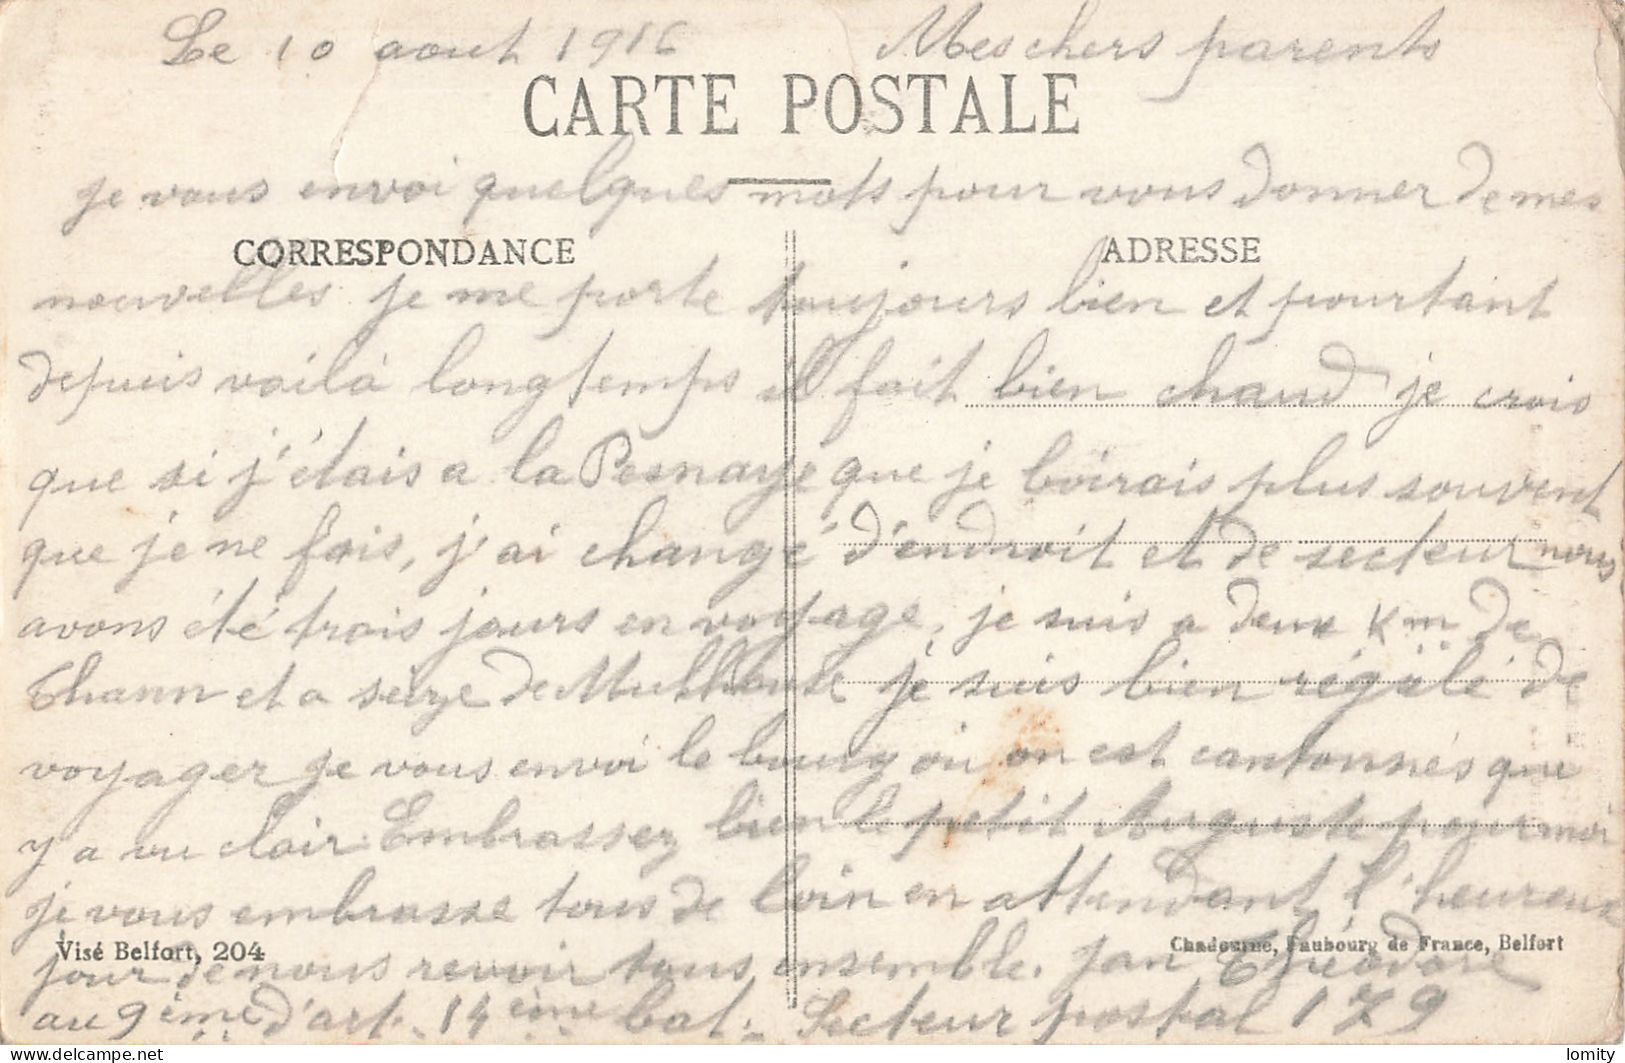 Destockage lot de 15 cartes postales CPA Alsace Alsacienne Roderen Mulhouse Mollau Thann Marienthal Saverne